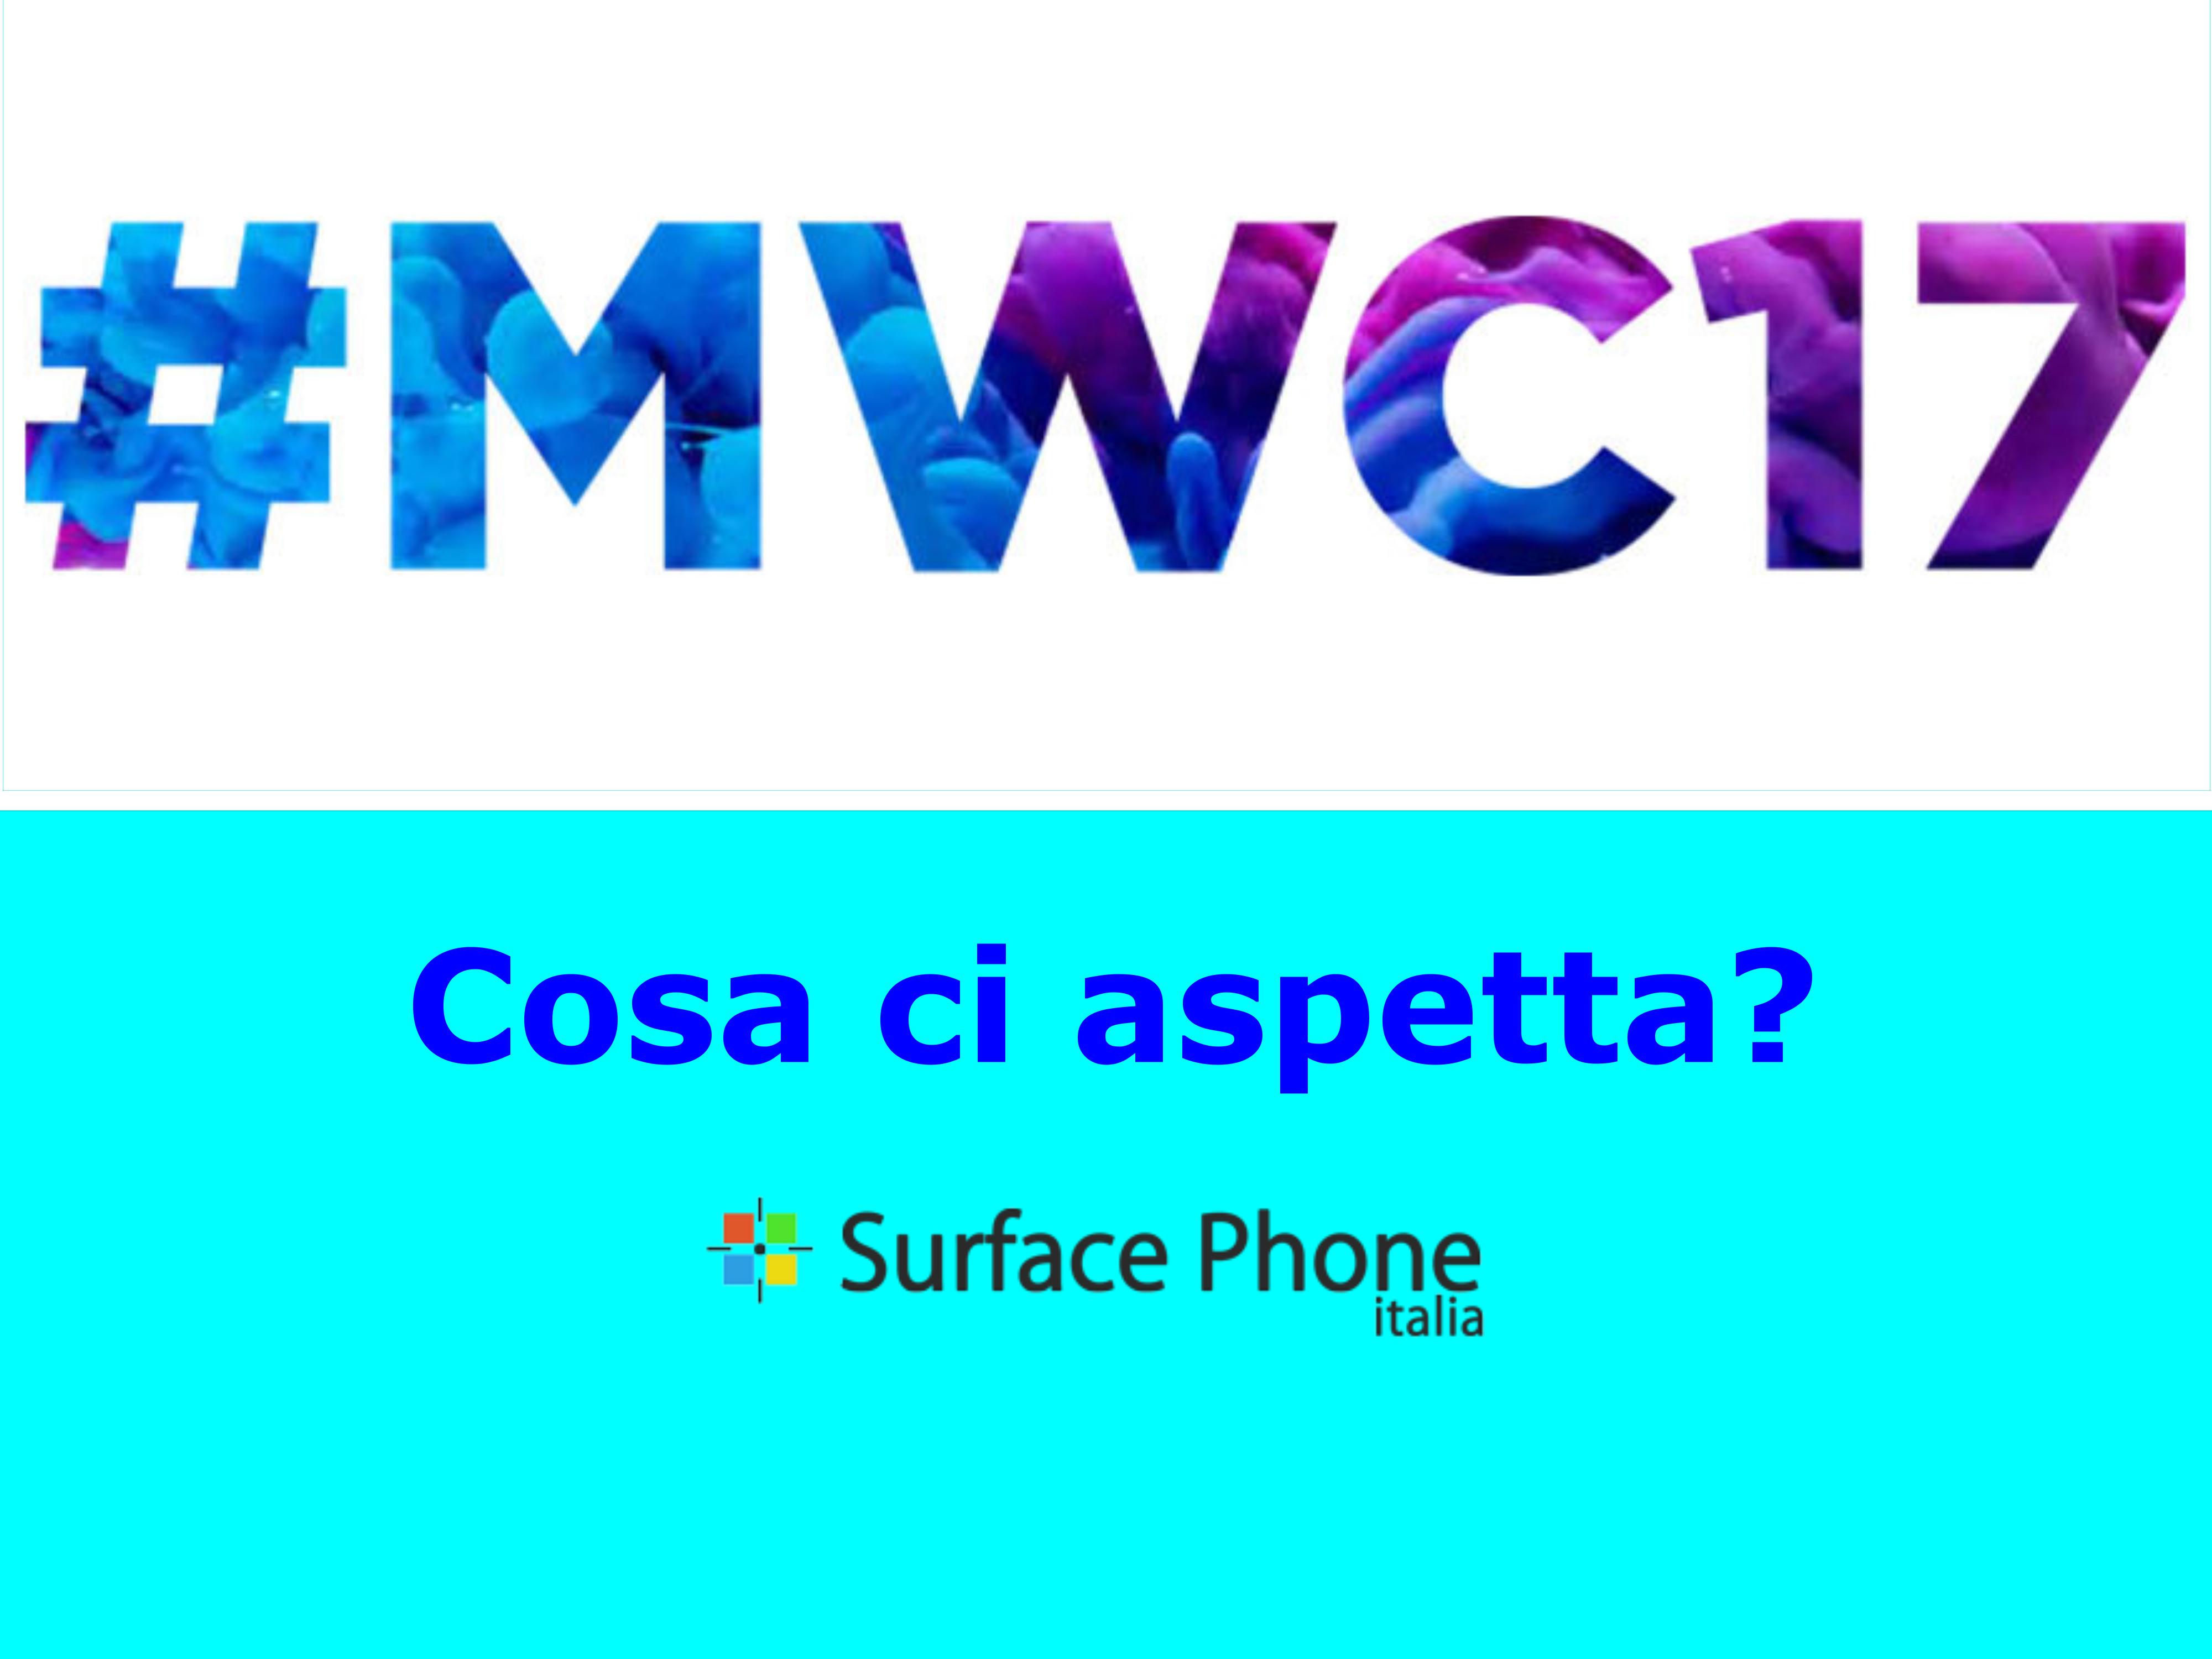 mwc 2017 - surface phone italia